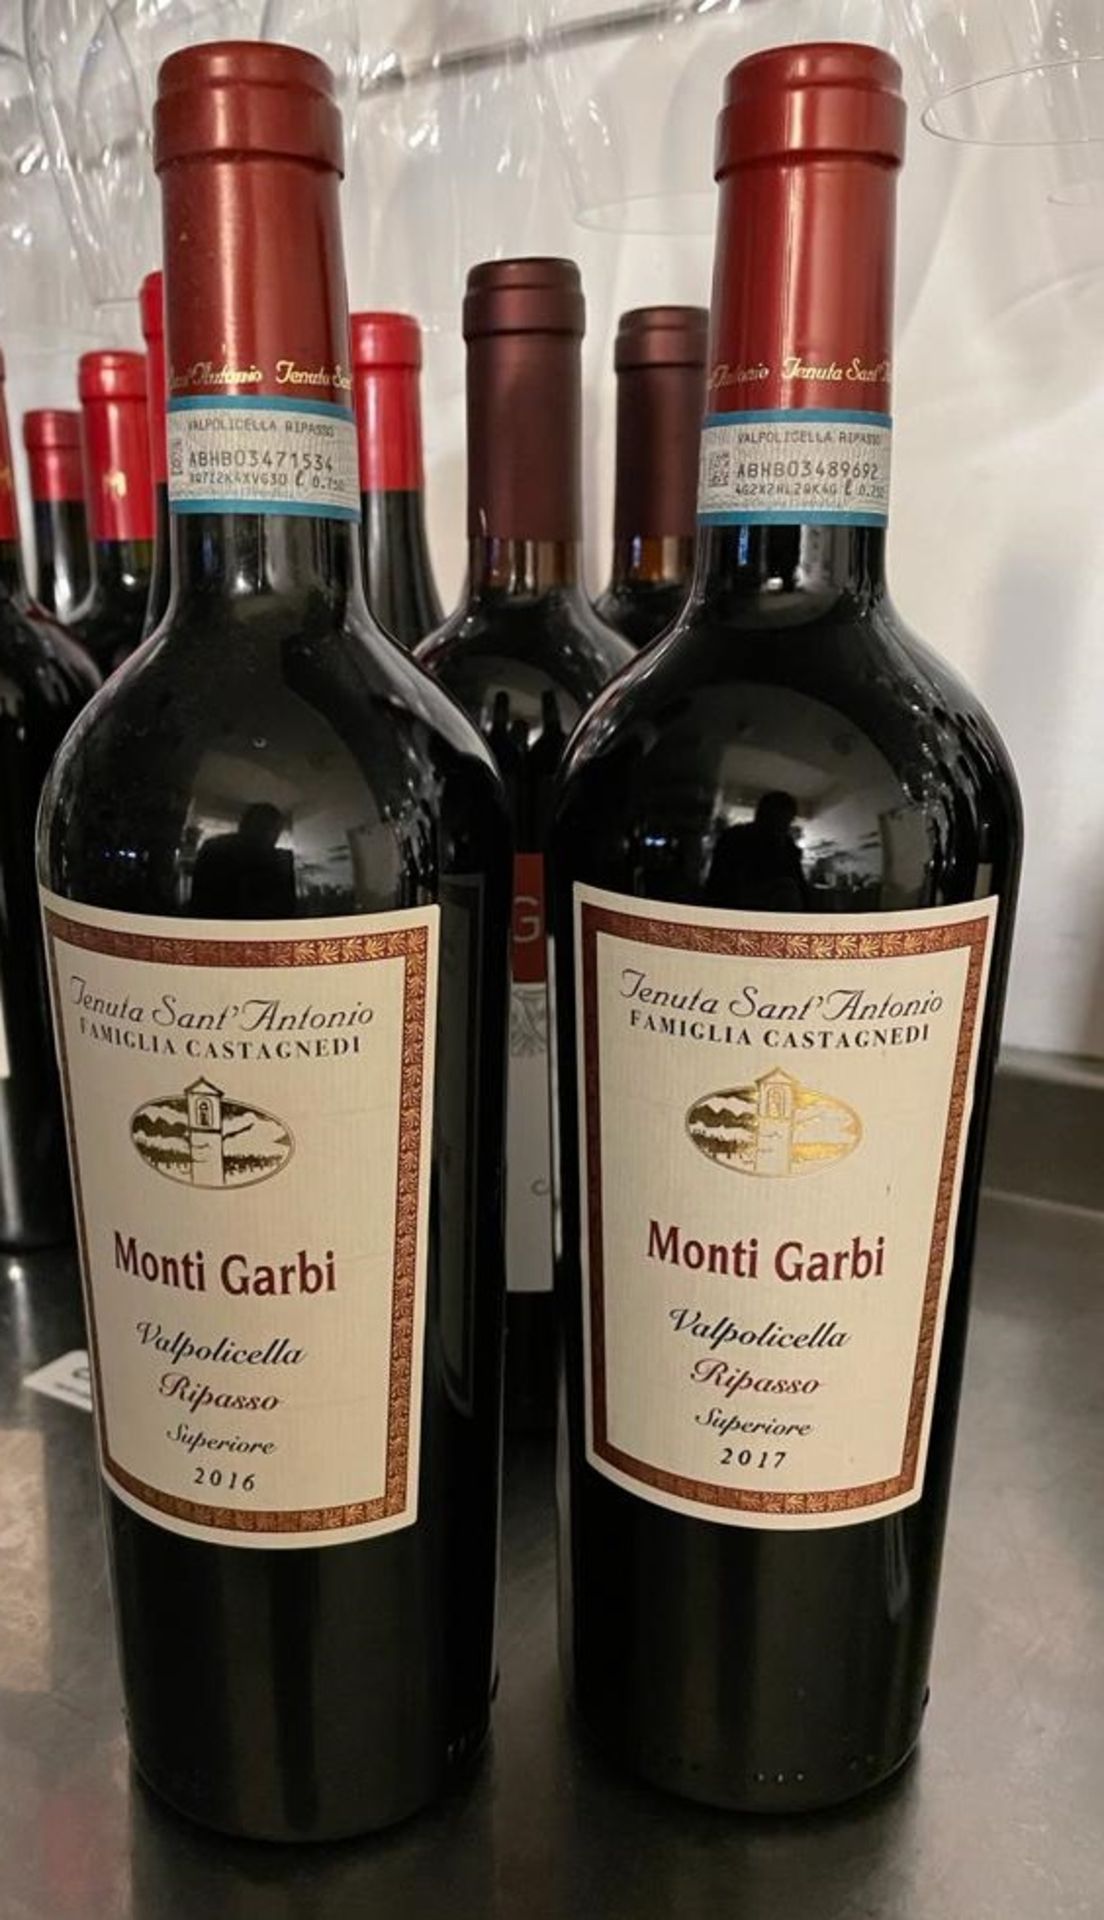 2 x Bottles Of MONTO GERBI VALPOLICELLA 2016 - New/Unopened Restaurant Stock - Ref: CAM648